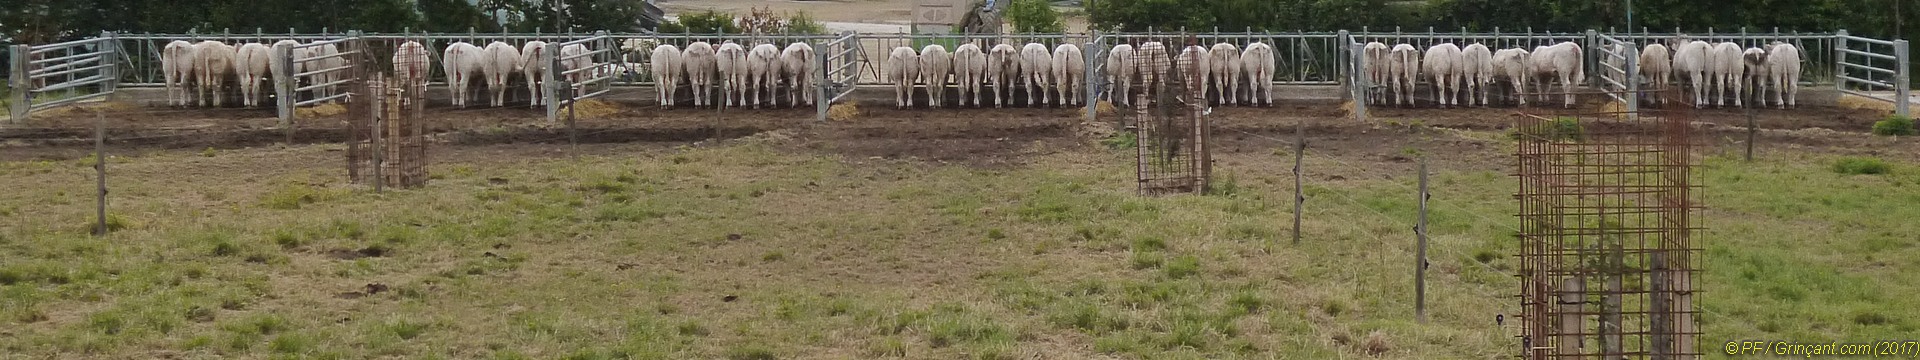 Vaches alignées